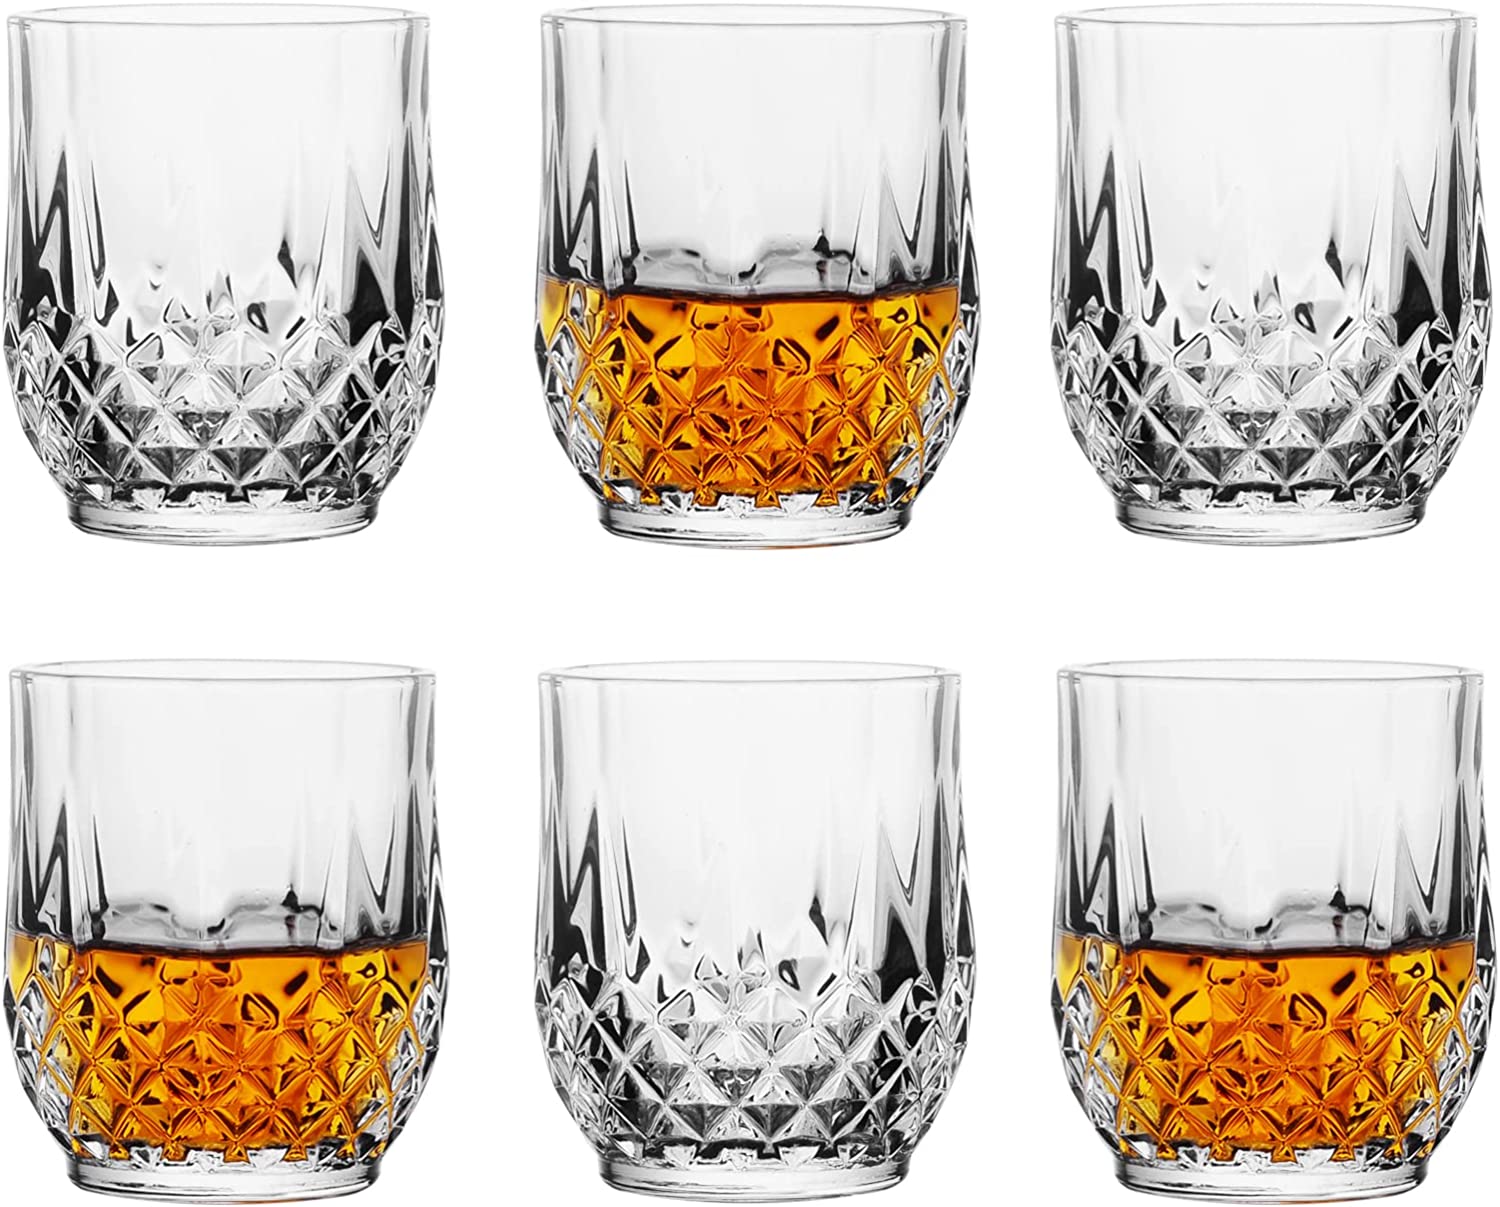 Vikko 1.5 Ounce Shot Glasses, Set of 12 Small Liquor and Spirit Glasses, Durable Tequila Bar Glasses for Alcohol and Espresso Shots, 12 Piece Mini